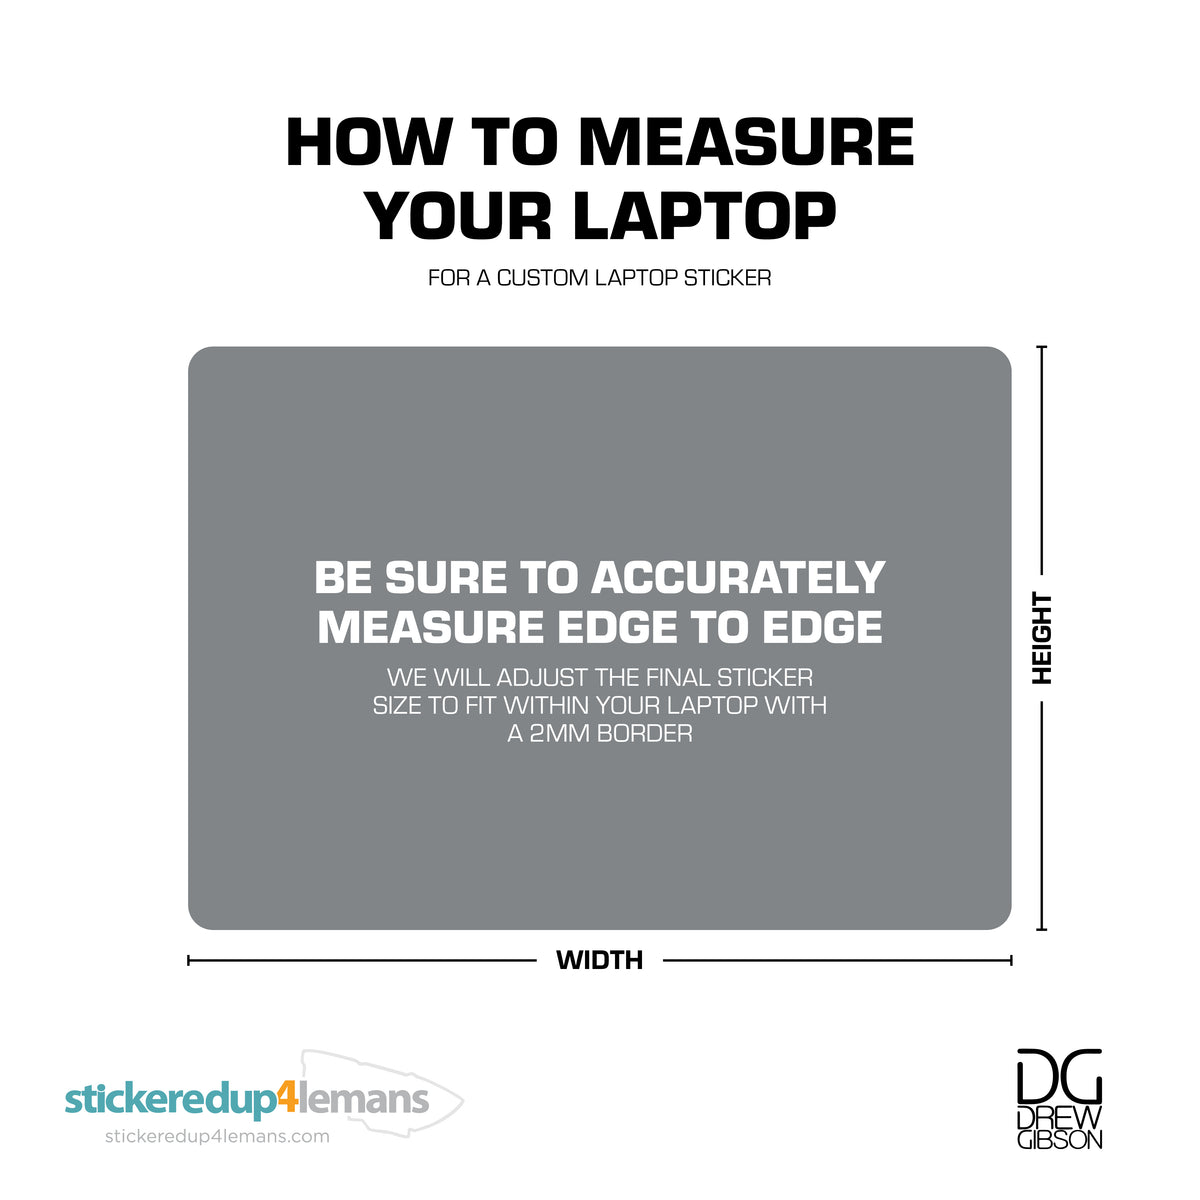 DG #025 Custom Size Laptop Sticker